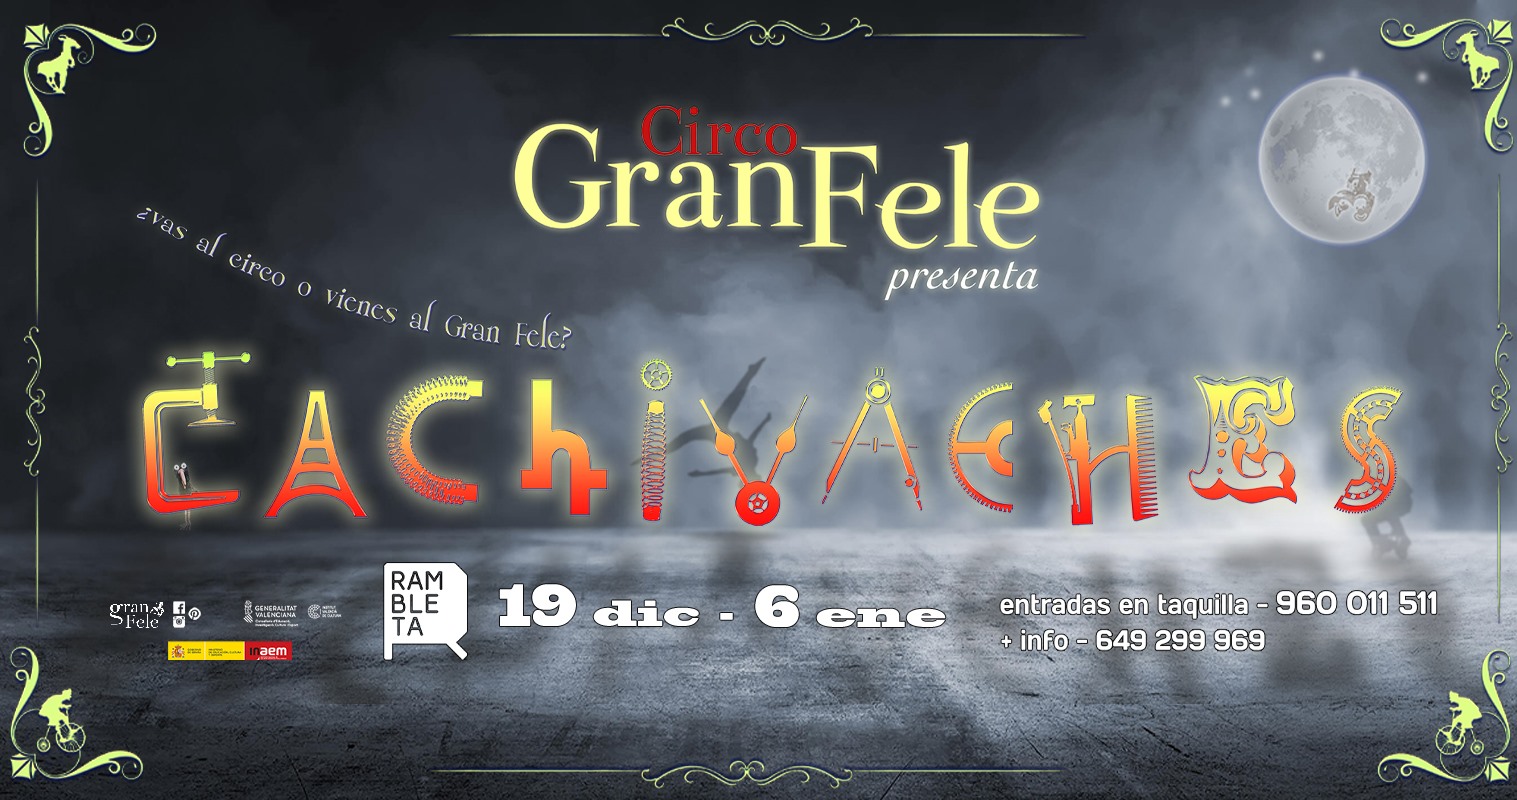 Circo Gran Fele estrena en La Rambleta “CACHIVACHES”